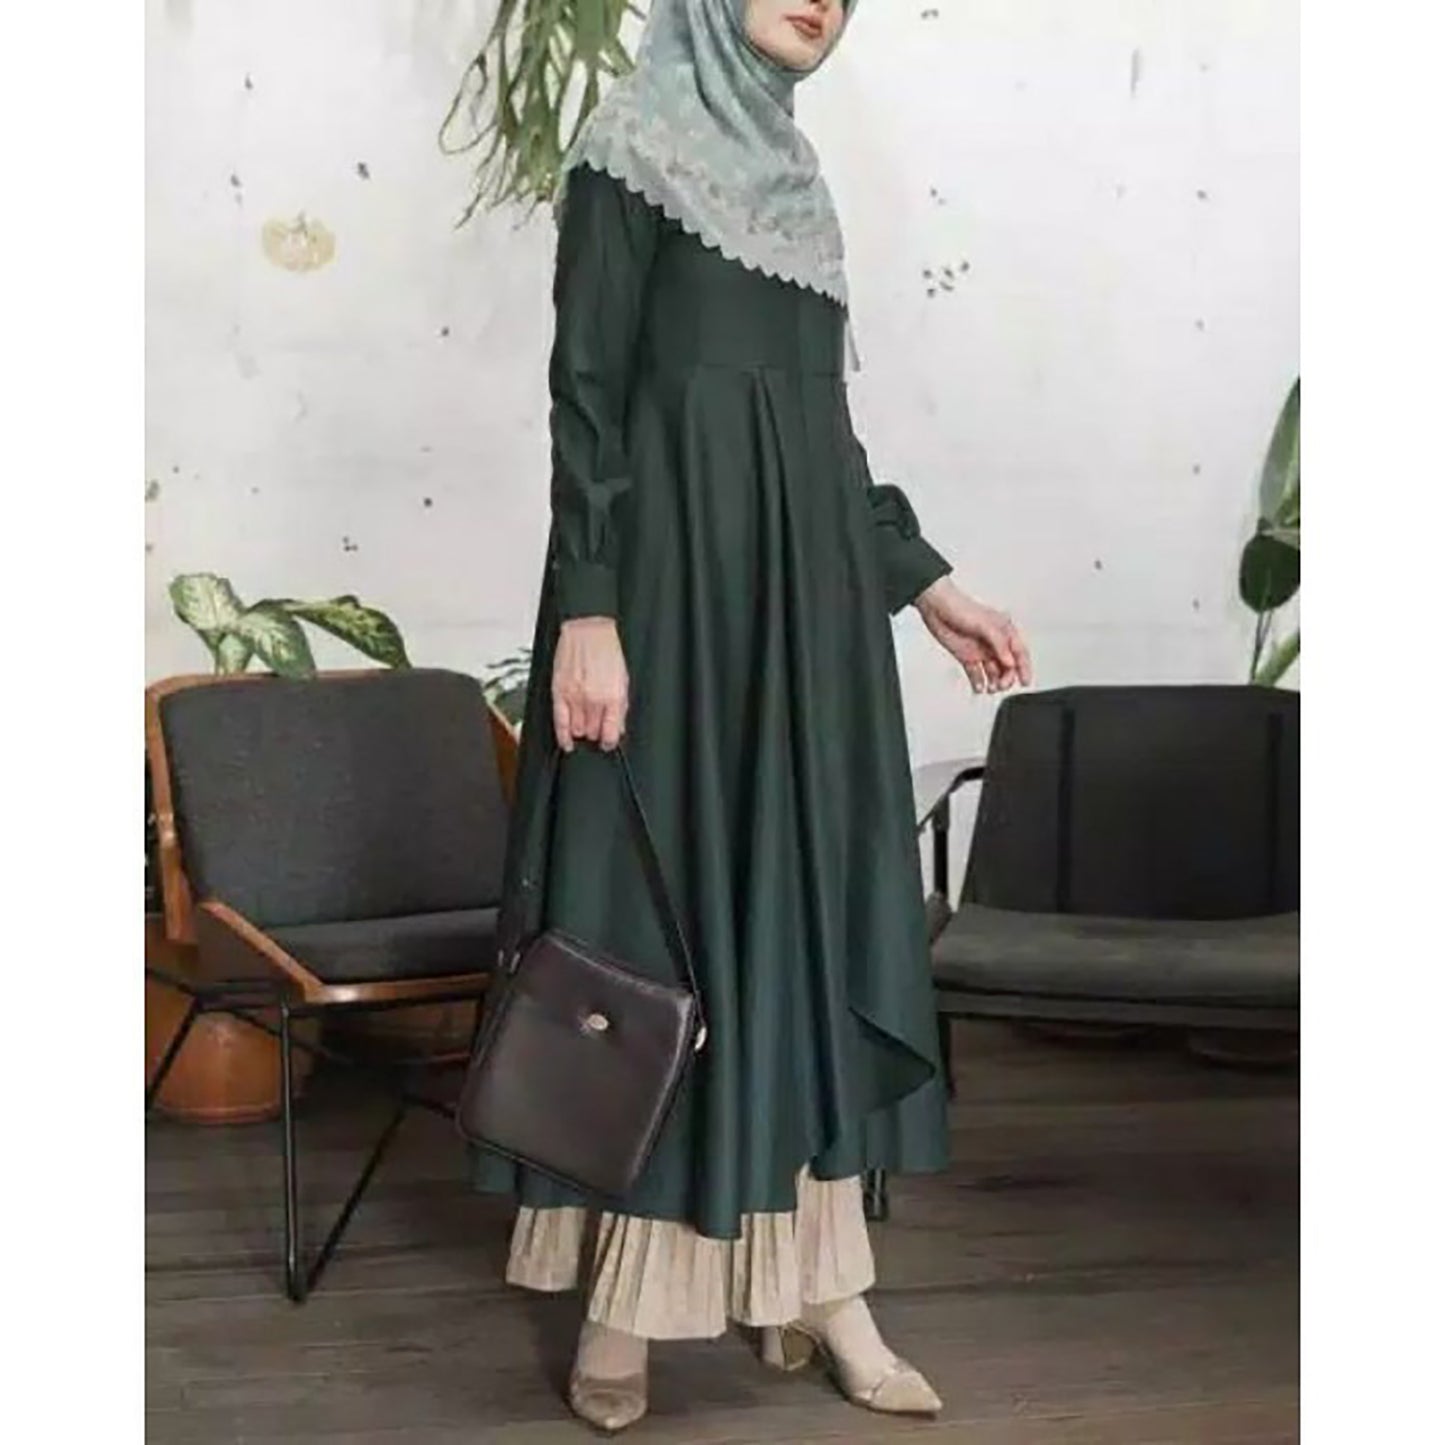 Elegance Contemporary Long Tunic for Women, Caftan, Islamic Dress, Caftan Dress, Burqa Dress, Muslim Dress